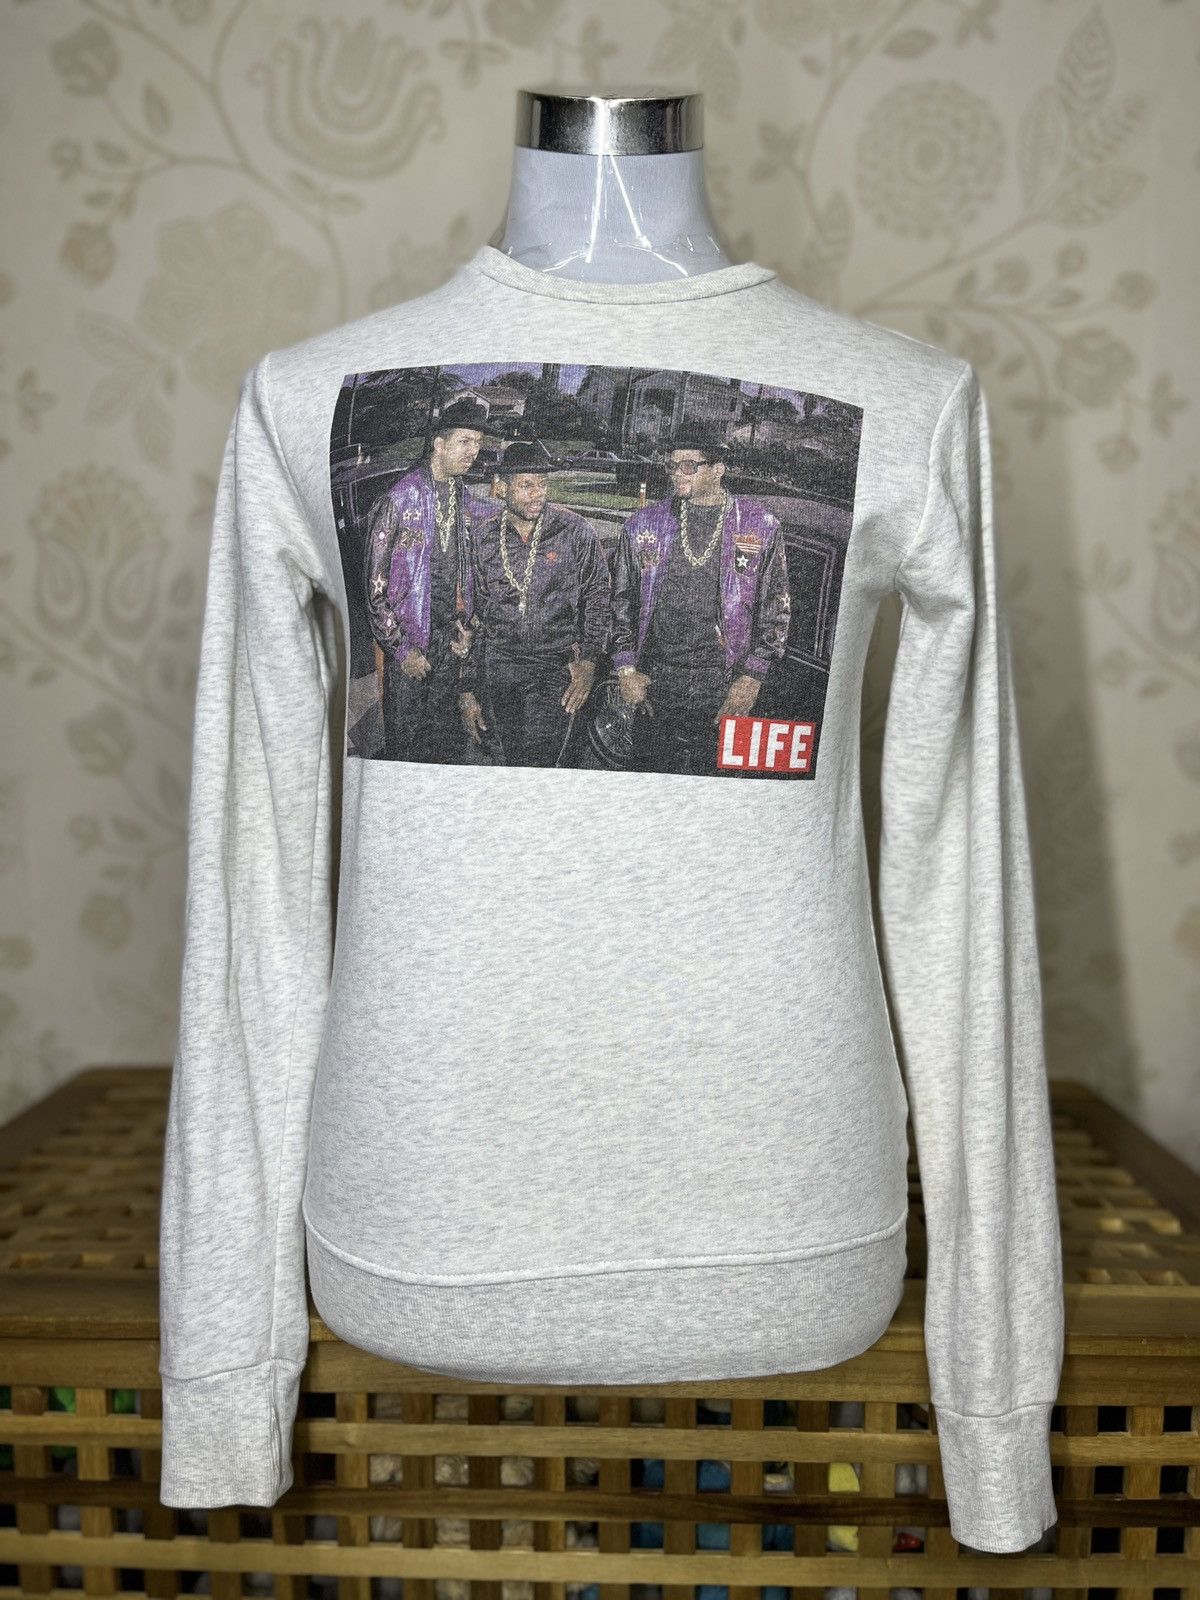 Band Tees - Rare Design RUN DMC Sweatshirts Life - 1